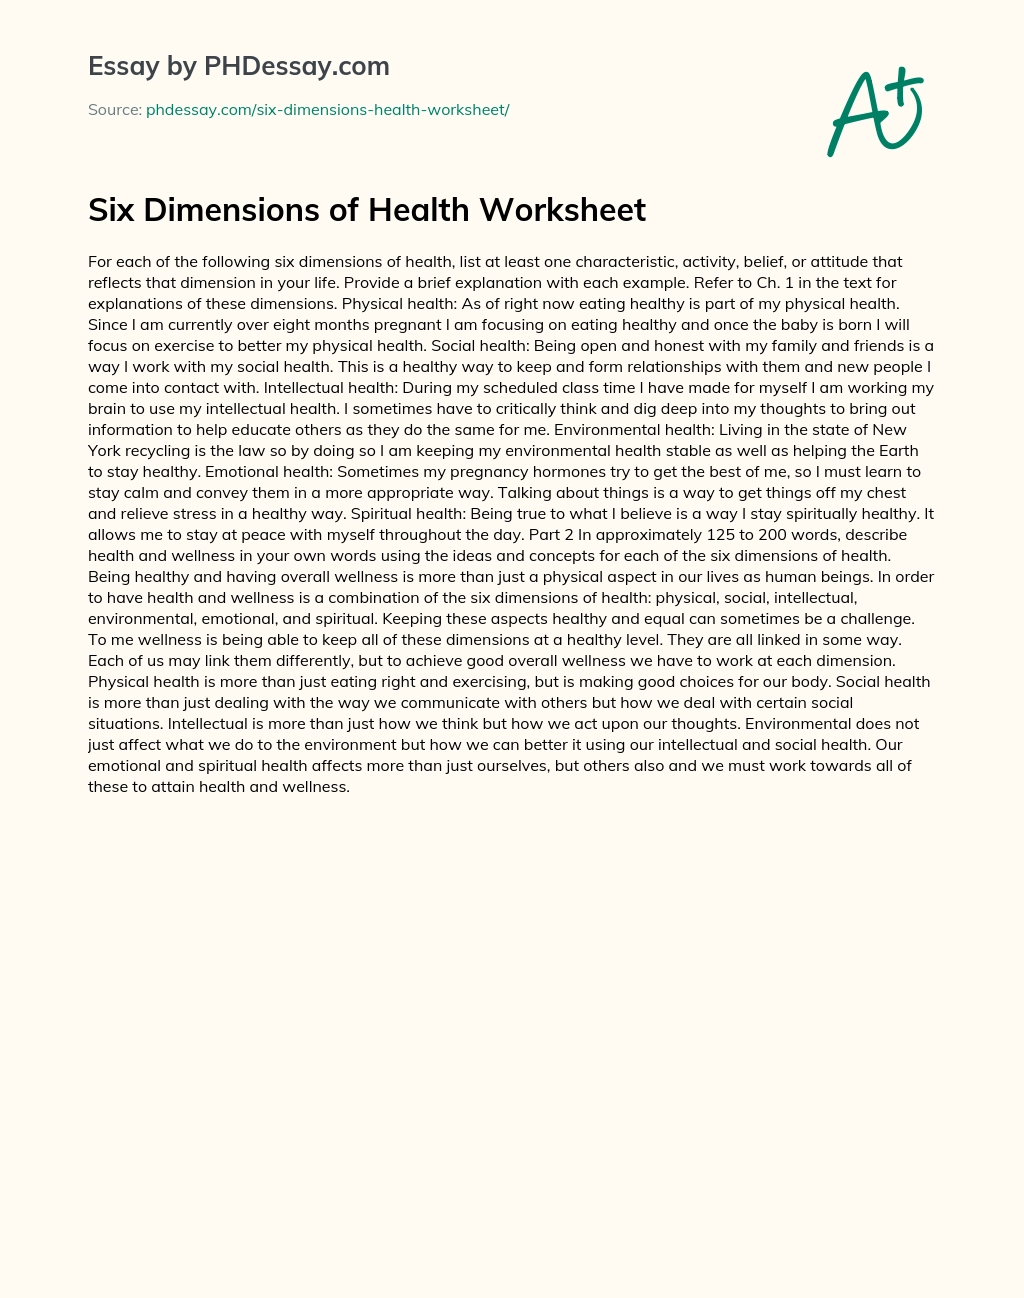 Six Dimensions of Health Worksheet essay